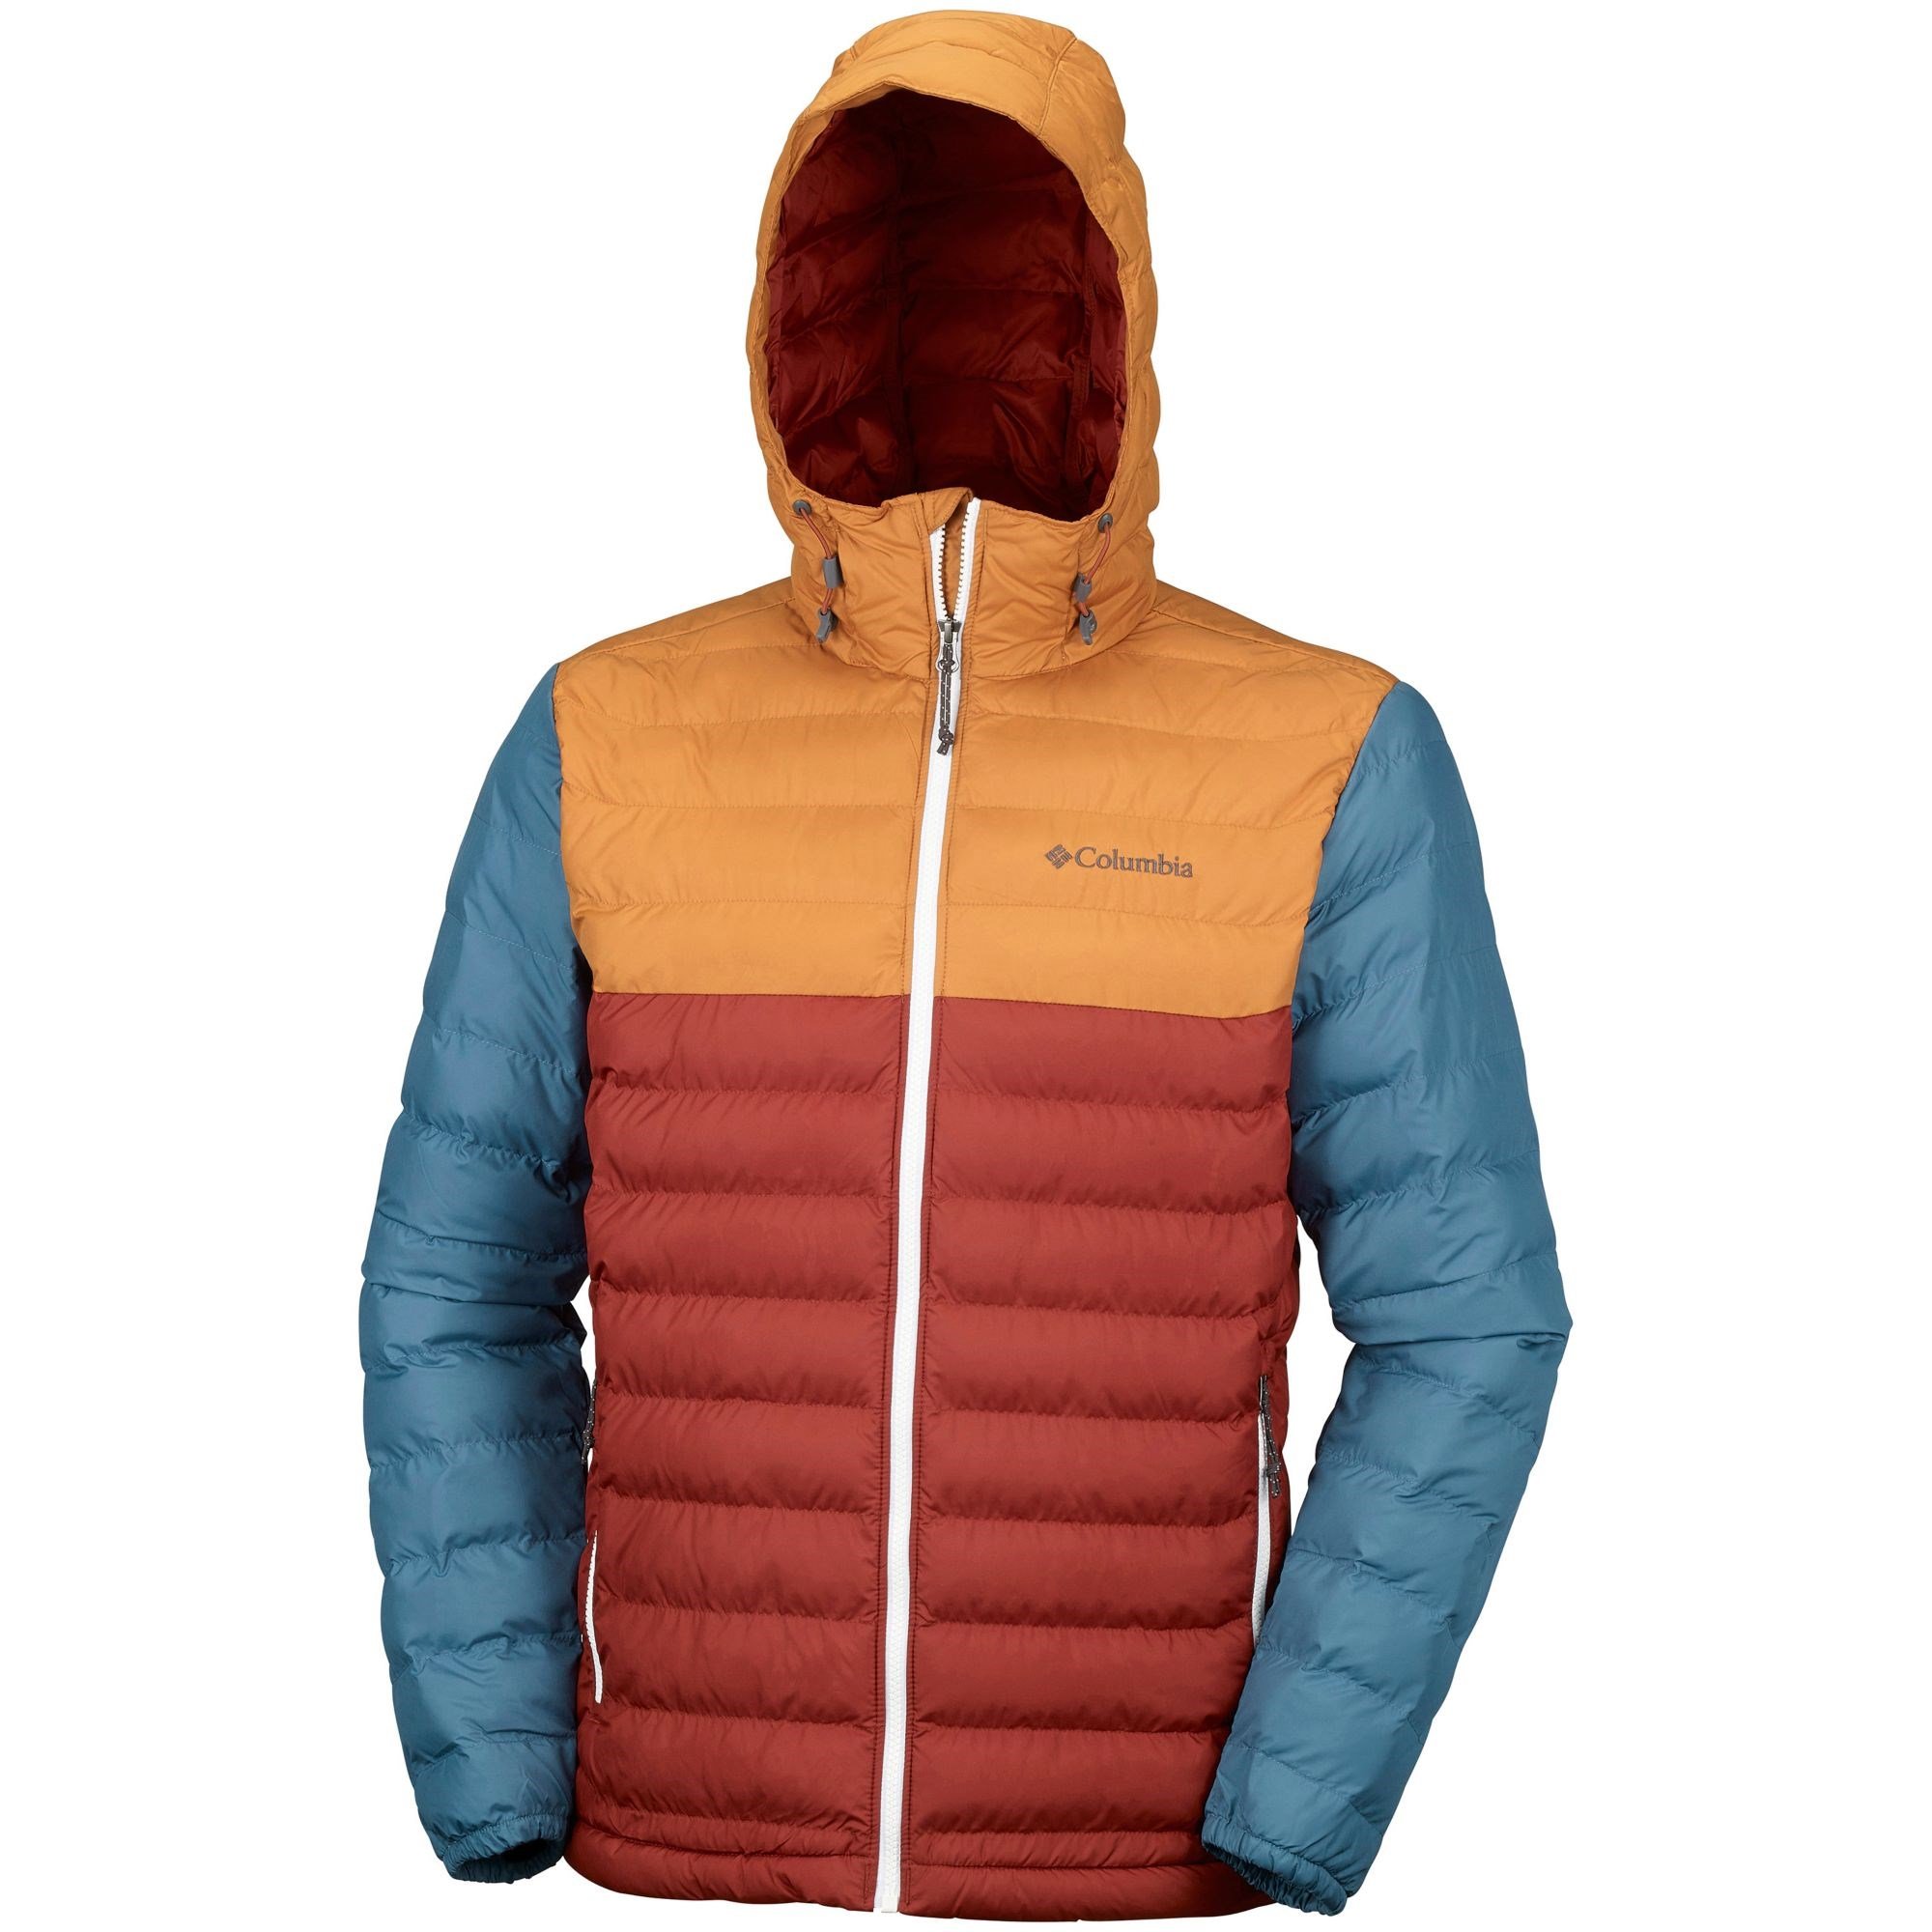 Columbia Powder Lite Hooded Jacket Erkek Mont Ürün kodu: WO1151-607 |  Etichet Sport